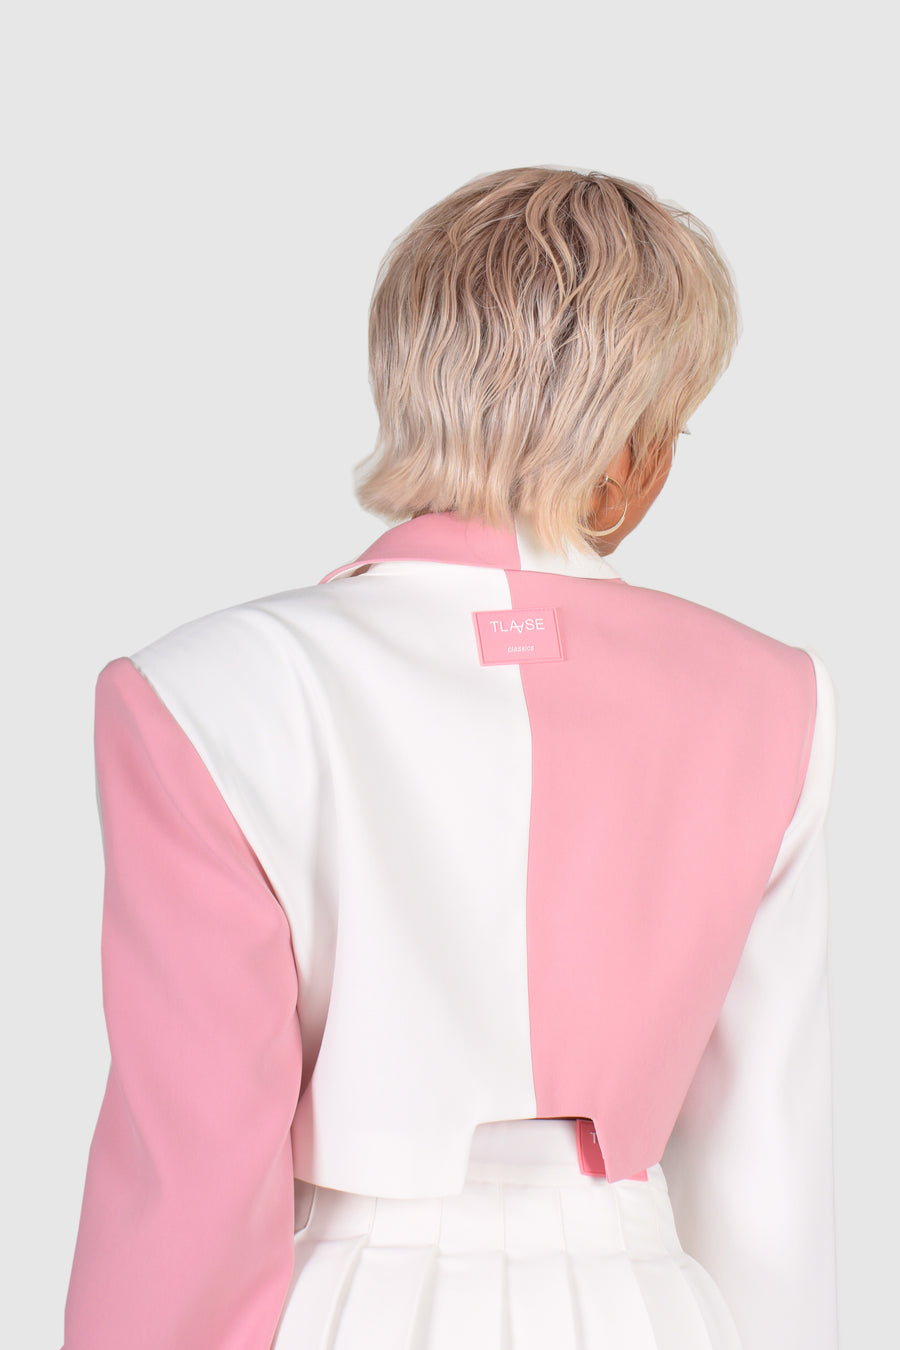 Classic Pink and White Blazer